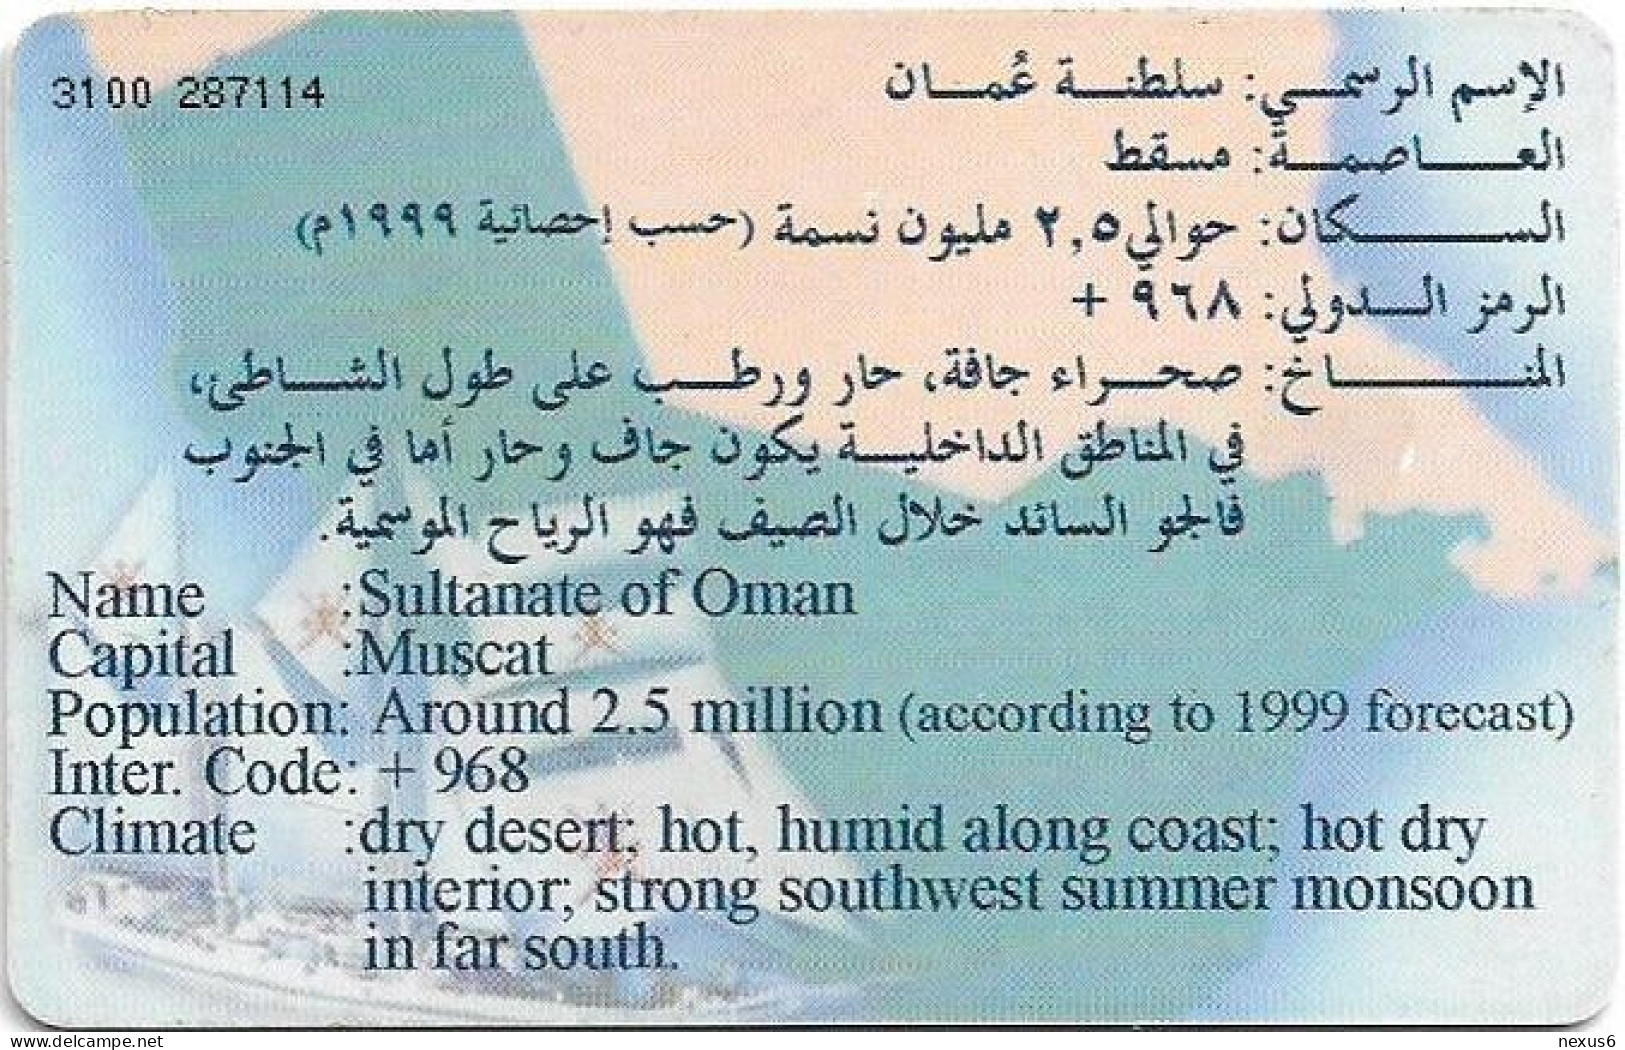 Jordan - Alo - Arab States Series - Oman, Gem5 Red, 08.2000, 3JD, 100.000ex, Used - Jordan